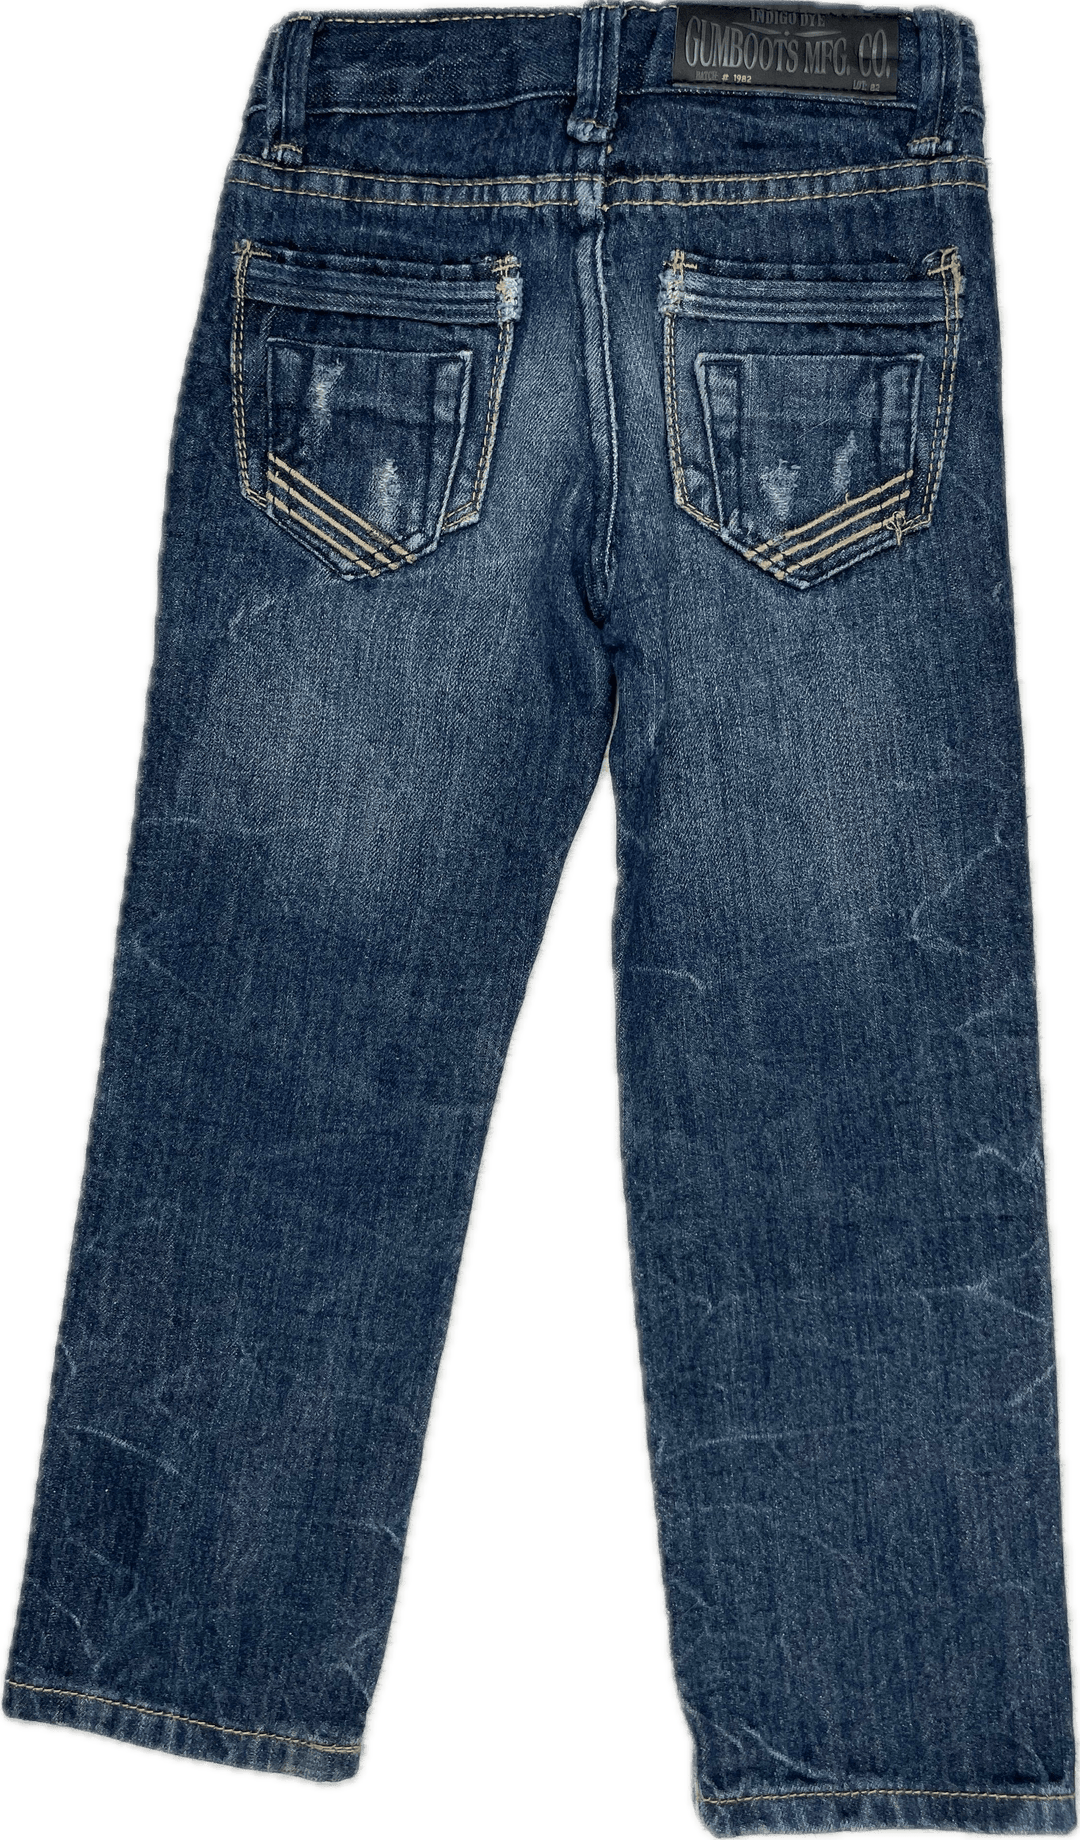 Gumboots Boys Straight Leg Distressed Denim Jeans - Size 4/5 - Jean Pool